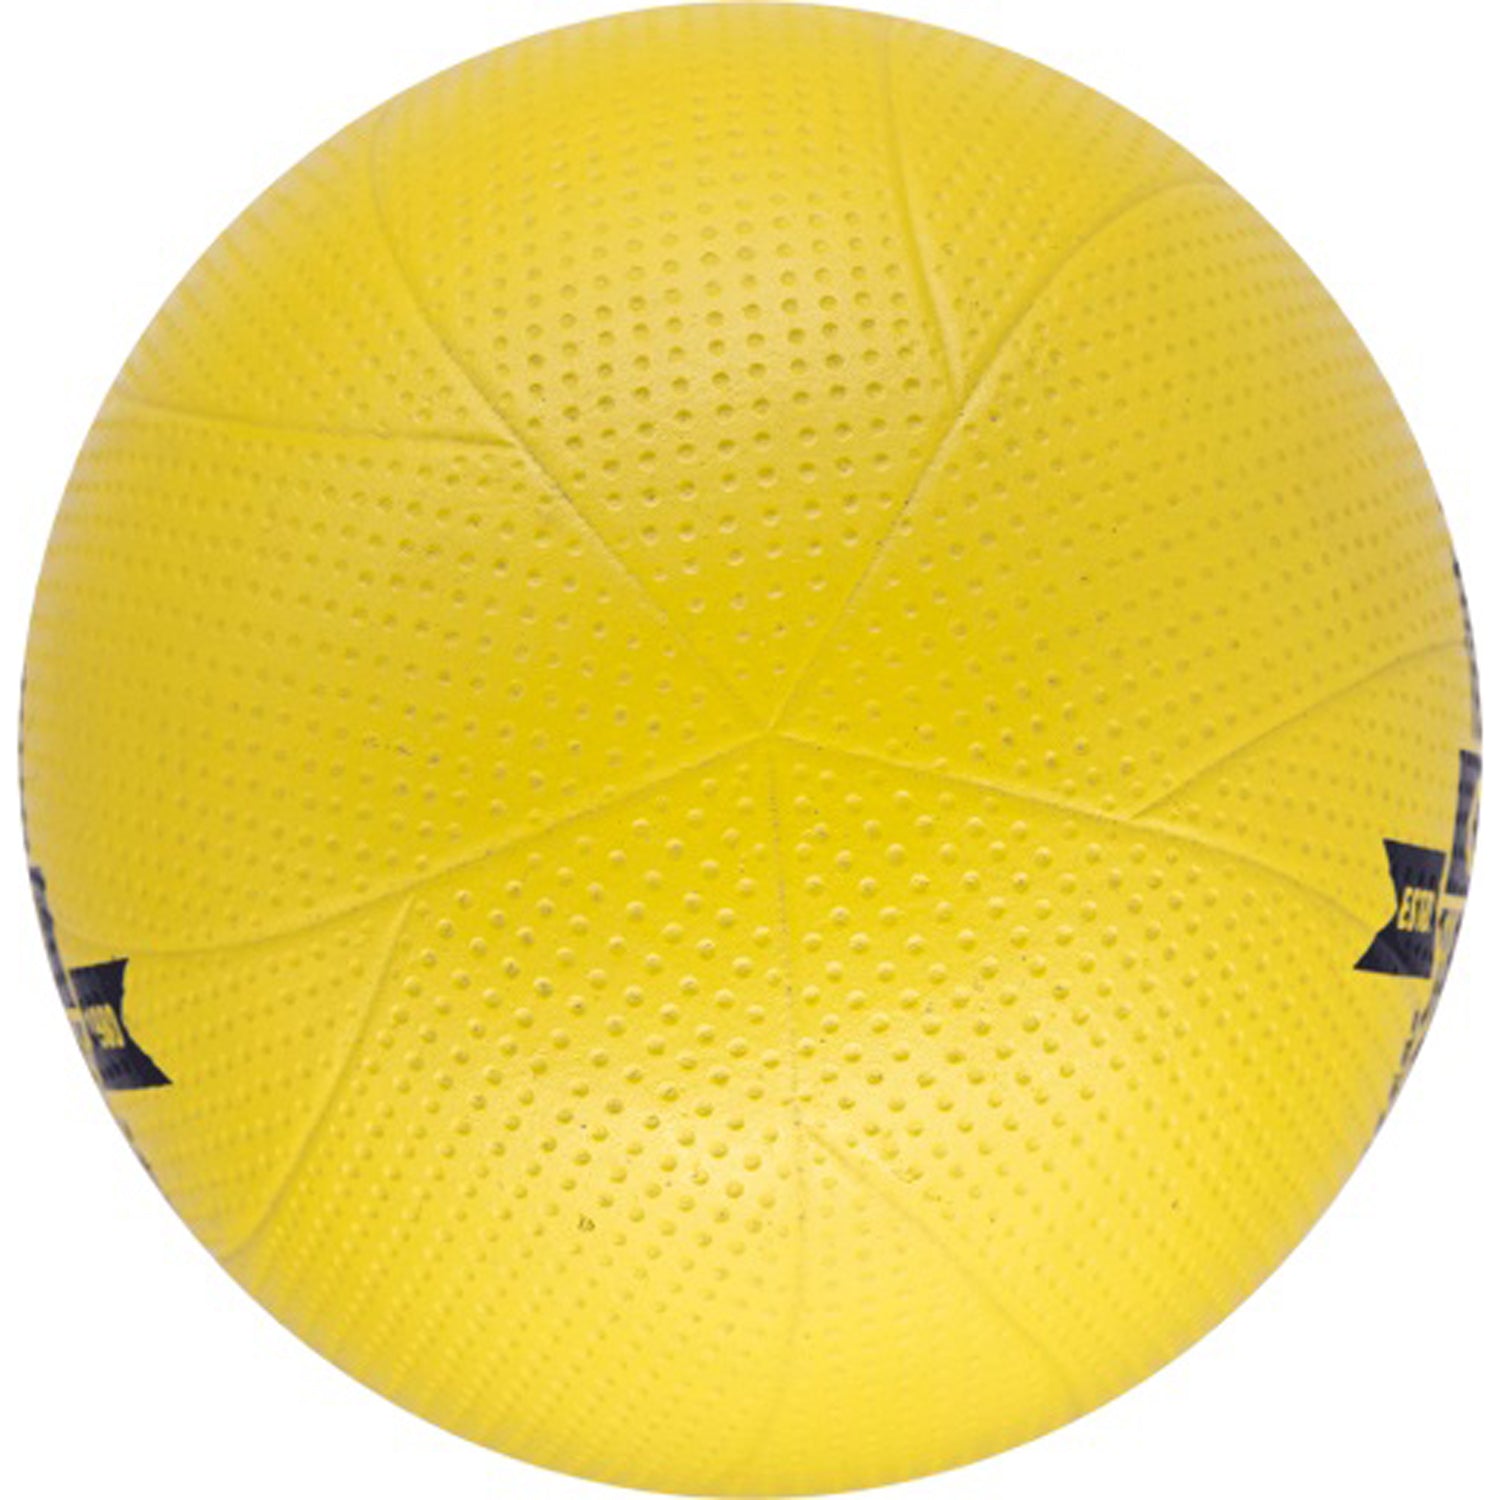 Cosco Academy Volleyball , Yellow - Size 4 - Best Price online Prokicksports.com